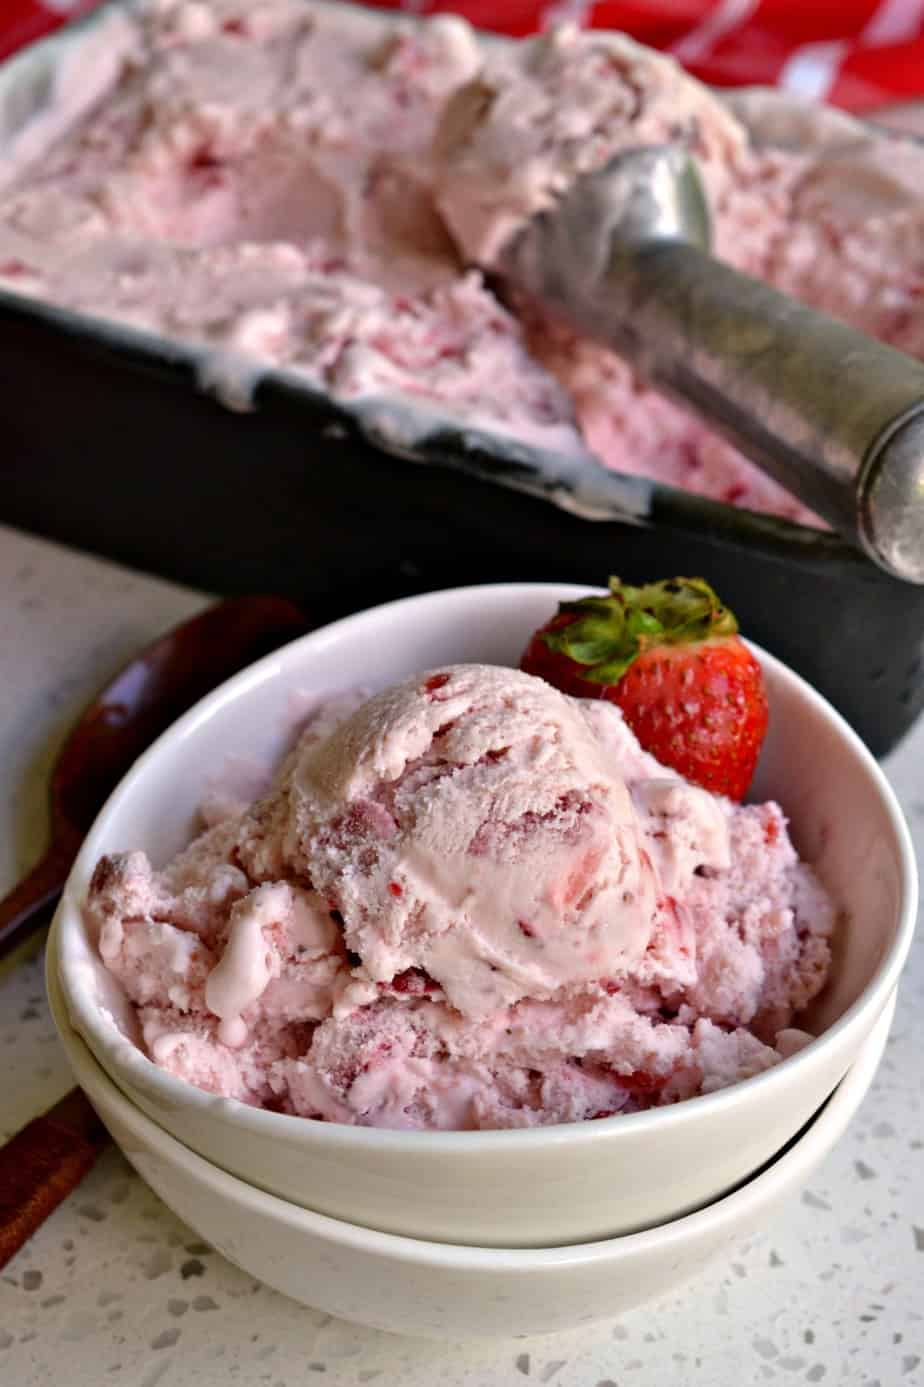 How to make the perfect strawberry ice-cream – recipe